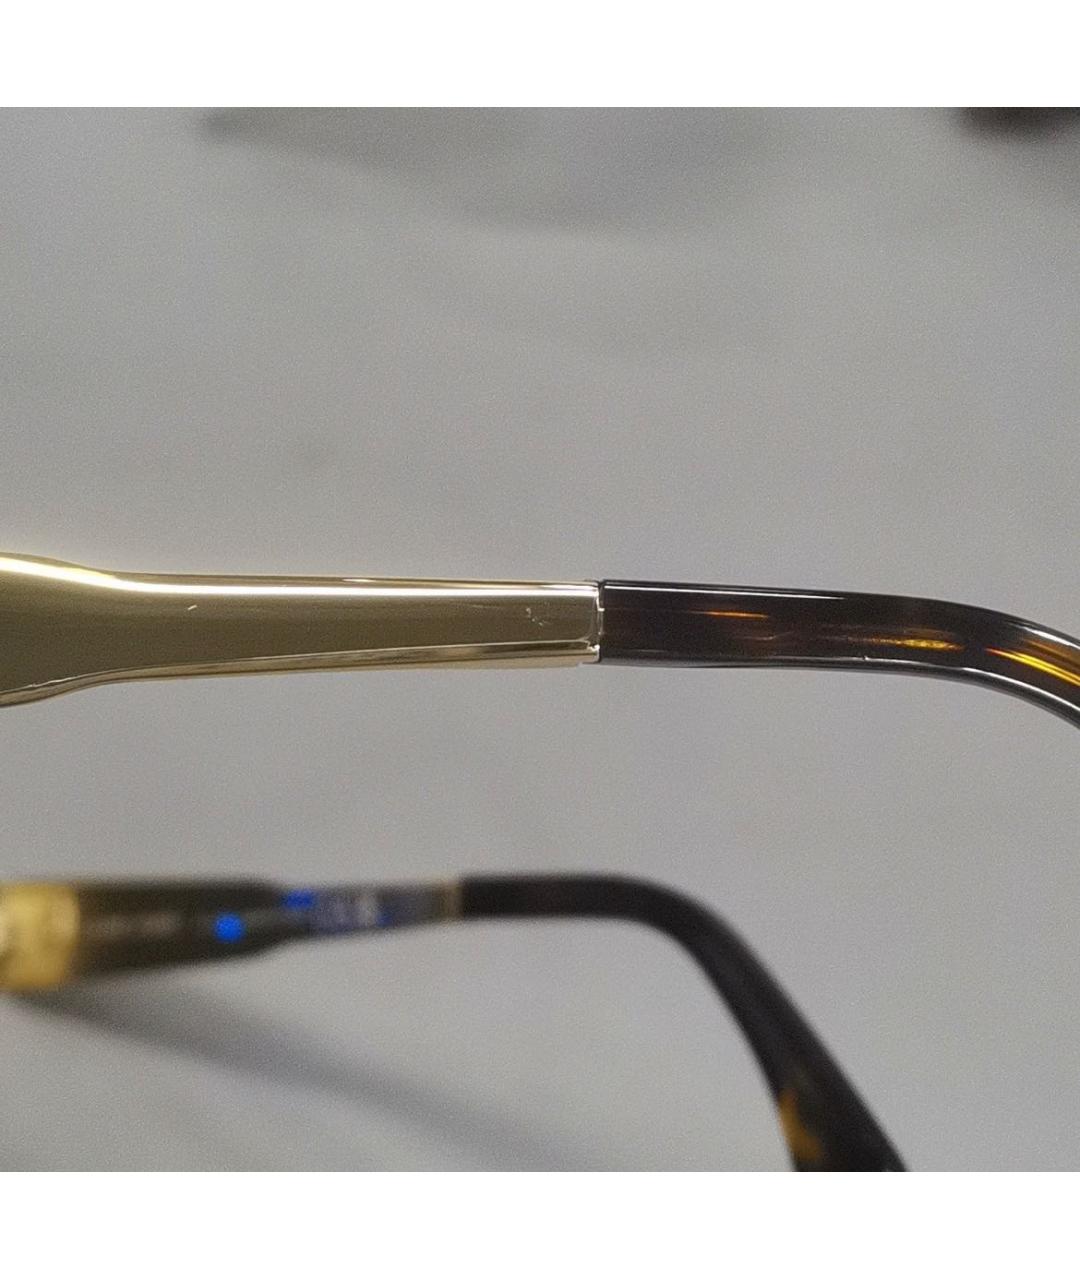 CELINE PRE-OWNED Золотые металлические солнцезащитные очки, фото 5